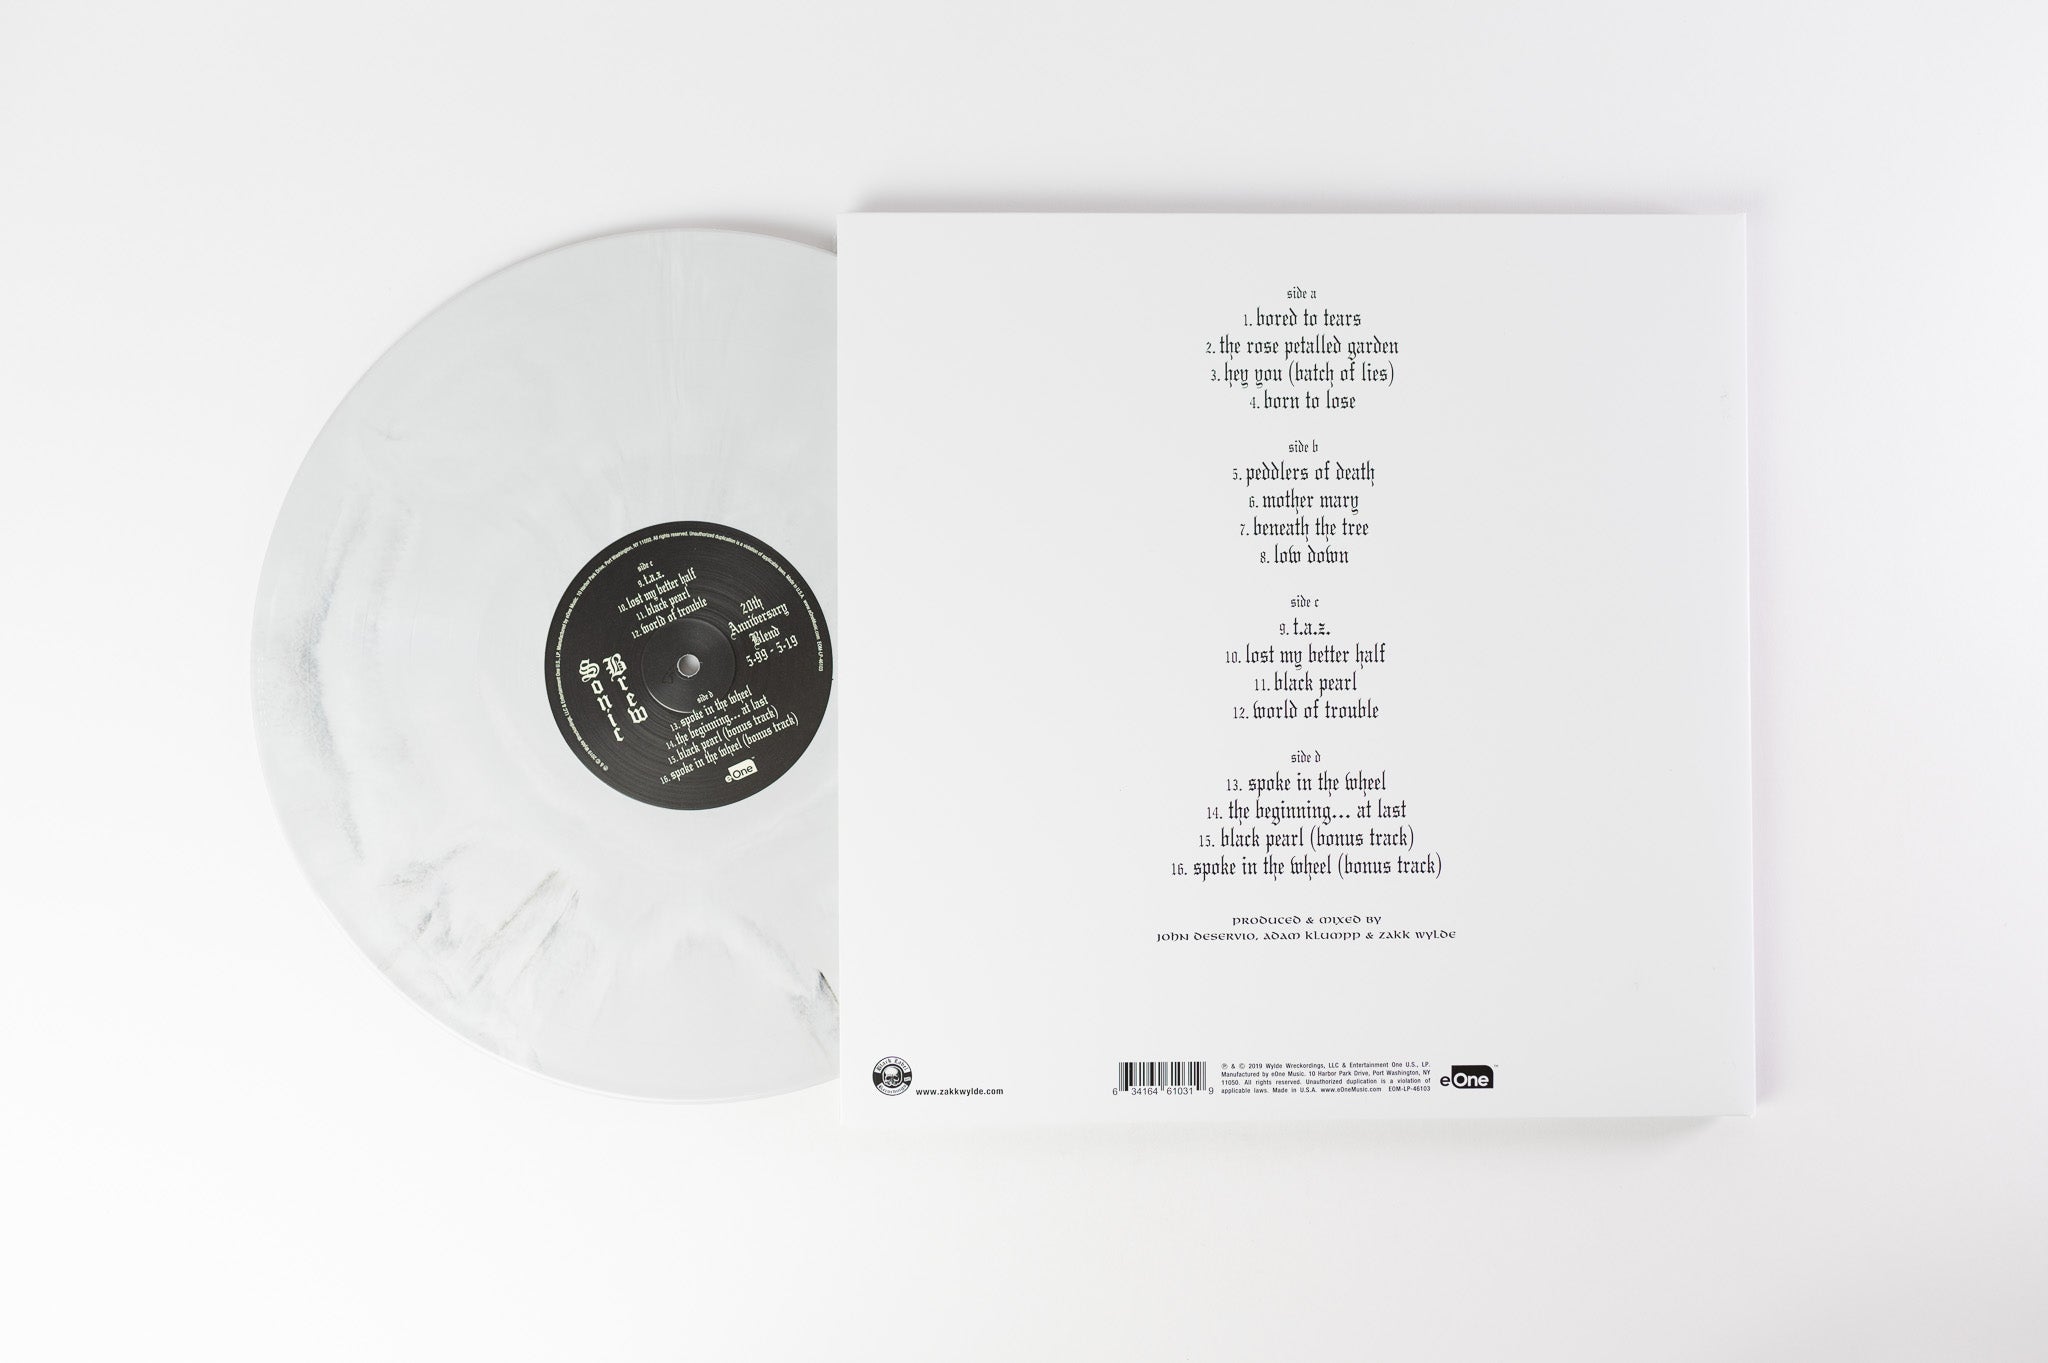 Black Label Society - None More Black on eOne Ltd Edition Box Set